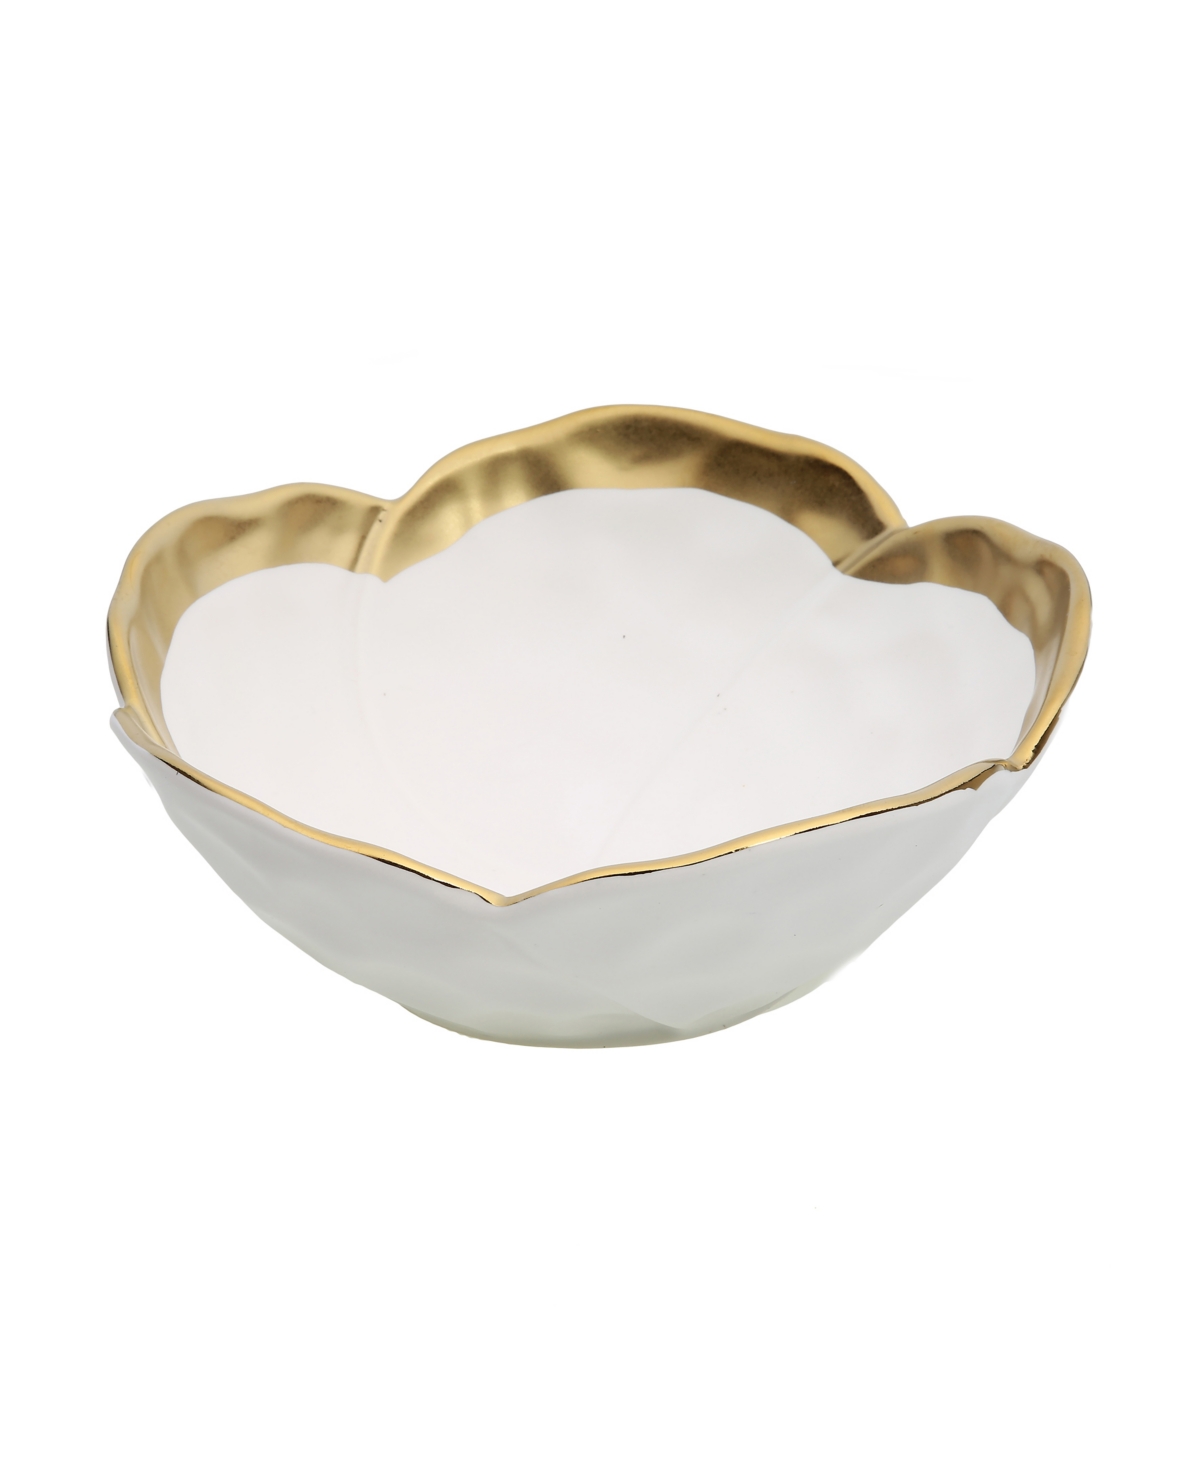 Porcelain Flower Shaped Bowl with Gold-Tone Rim, 7" D - White